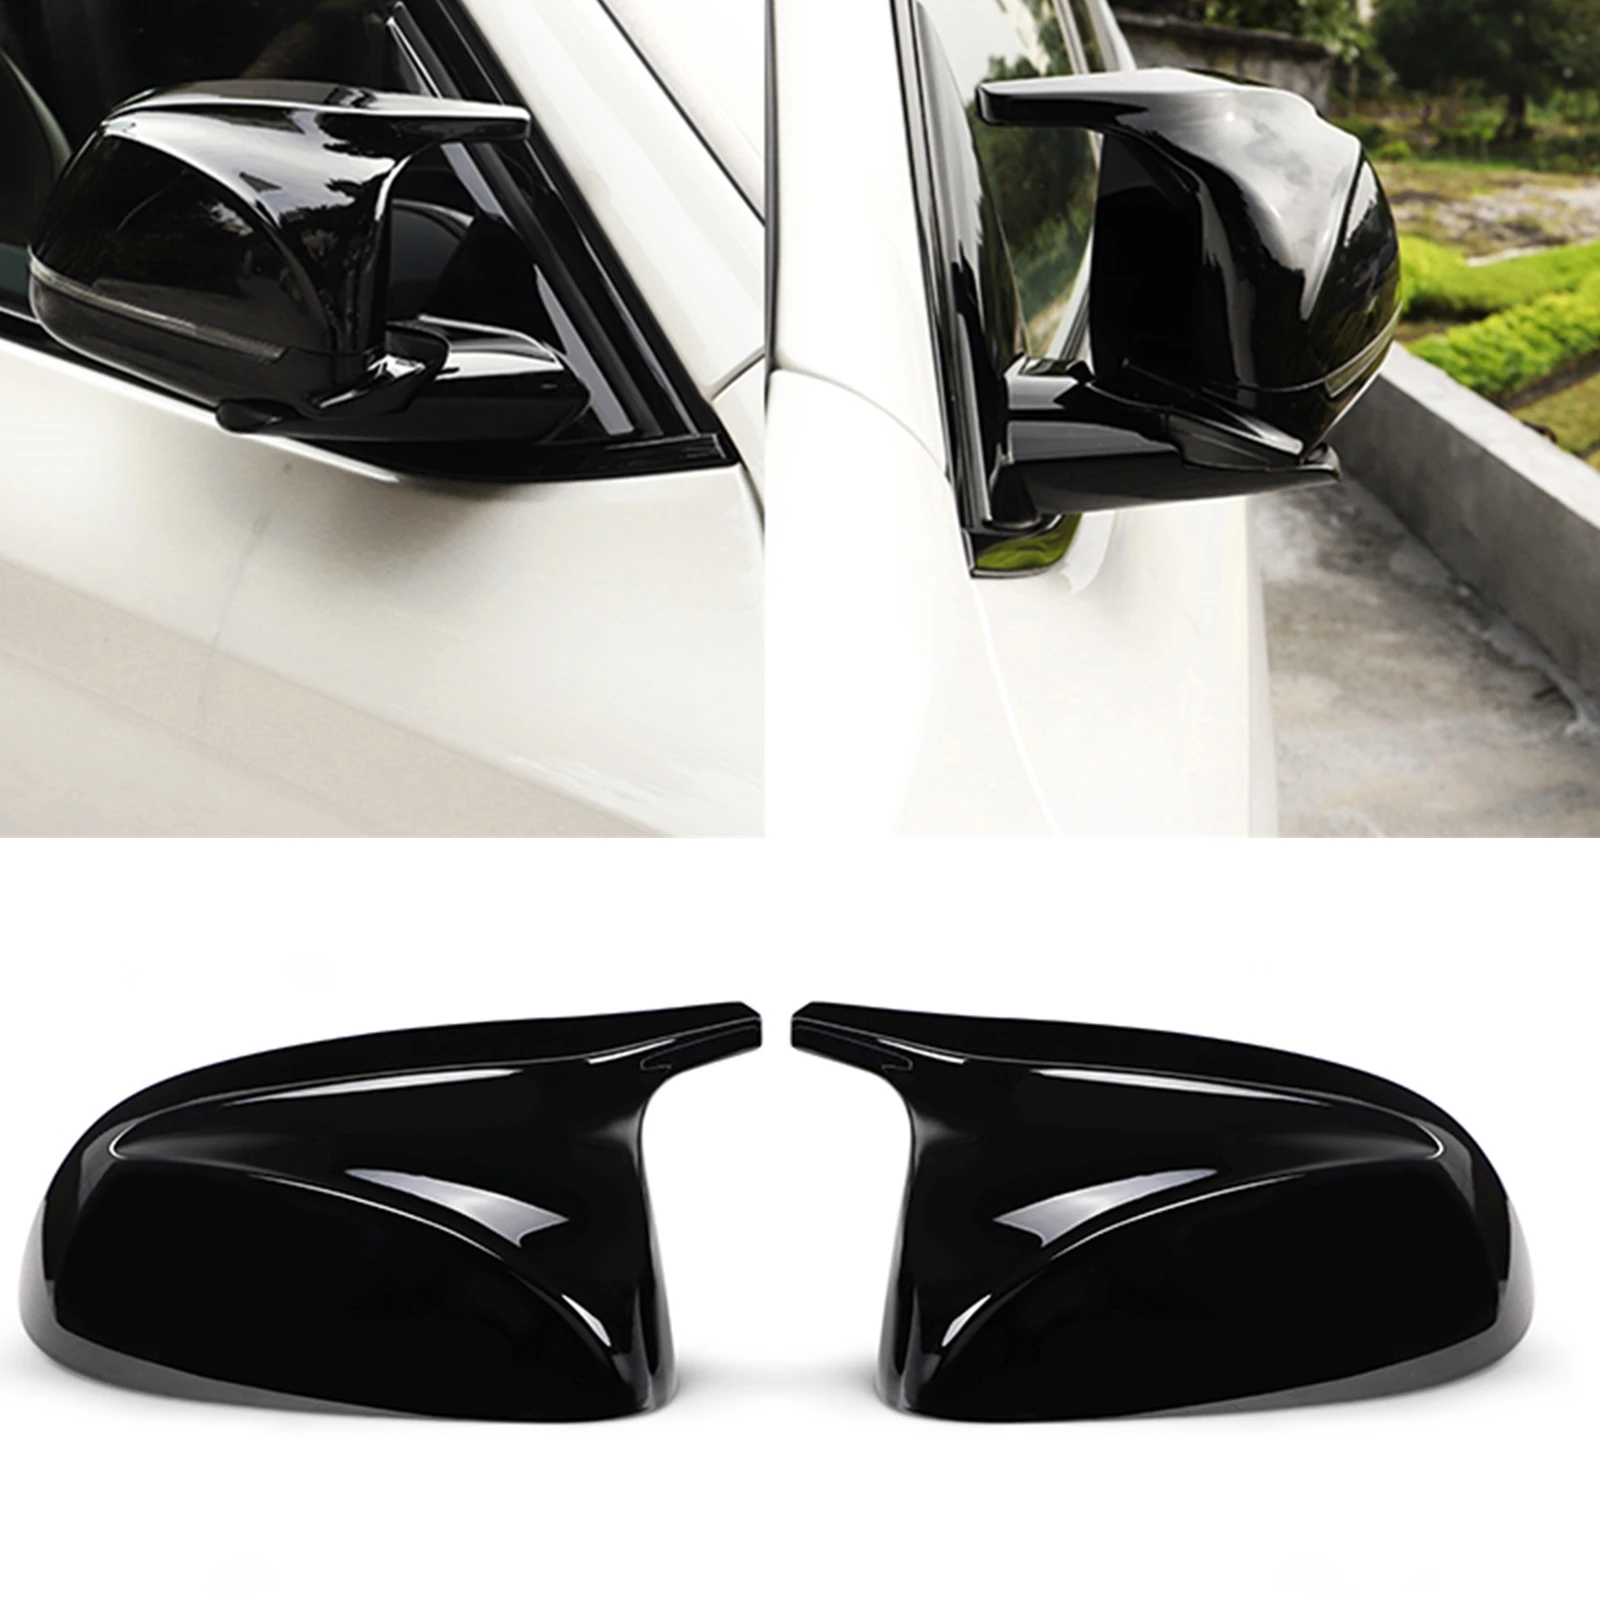 

Glossy Black Mirror Cover For BMW X3 G01 X4 G02 X5 G05 X6 G06 X7 G07 iX3 2018-2023 Exterior Car Rear View Cap Shell Replacement